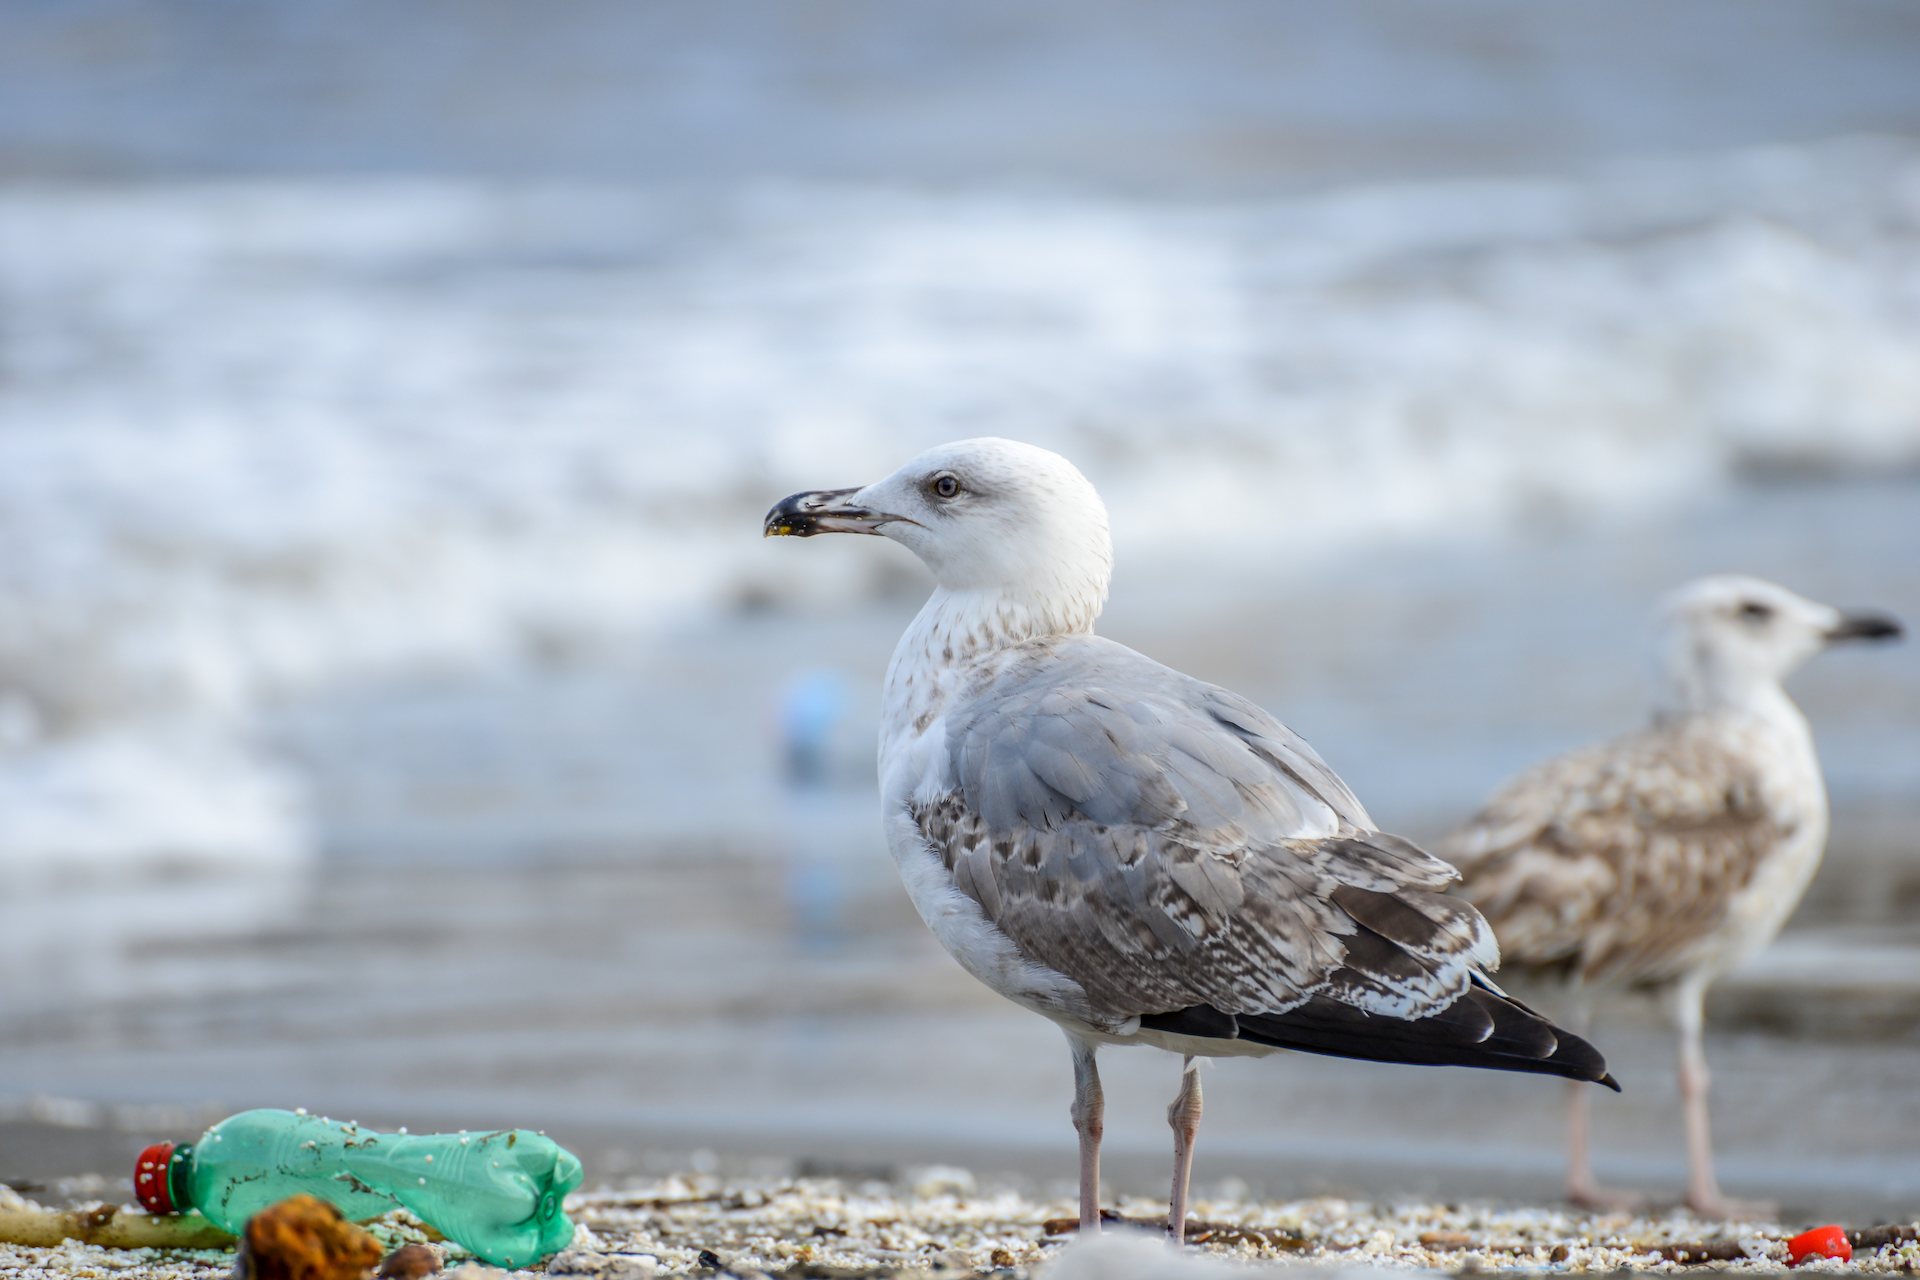 seagulls on the beach next to plastic trash